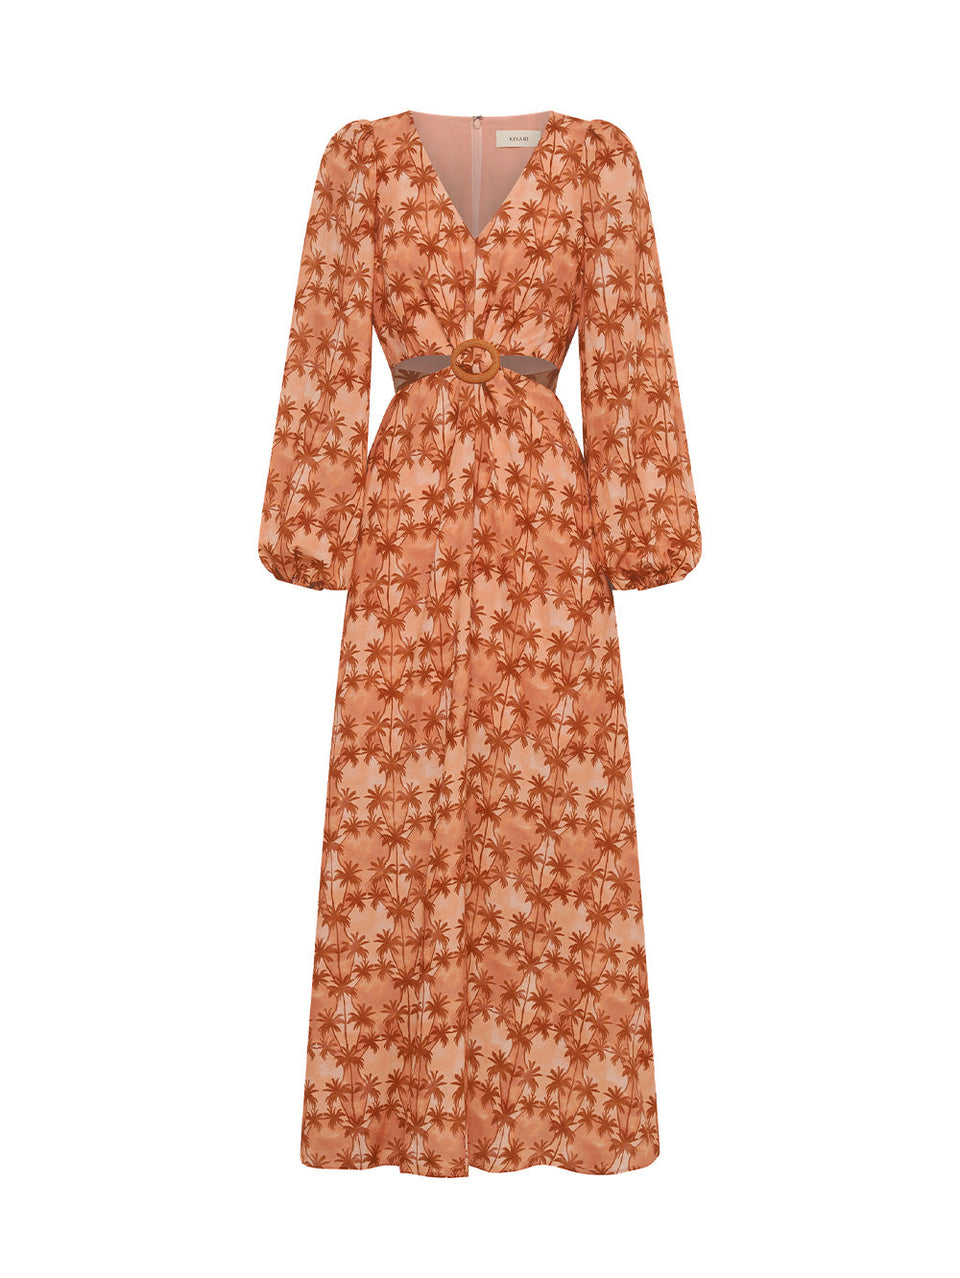 Leilani Cut Out Maxi Dress KIVARI | Bronze and peach palm printed maxi dress